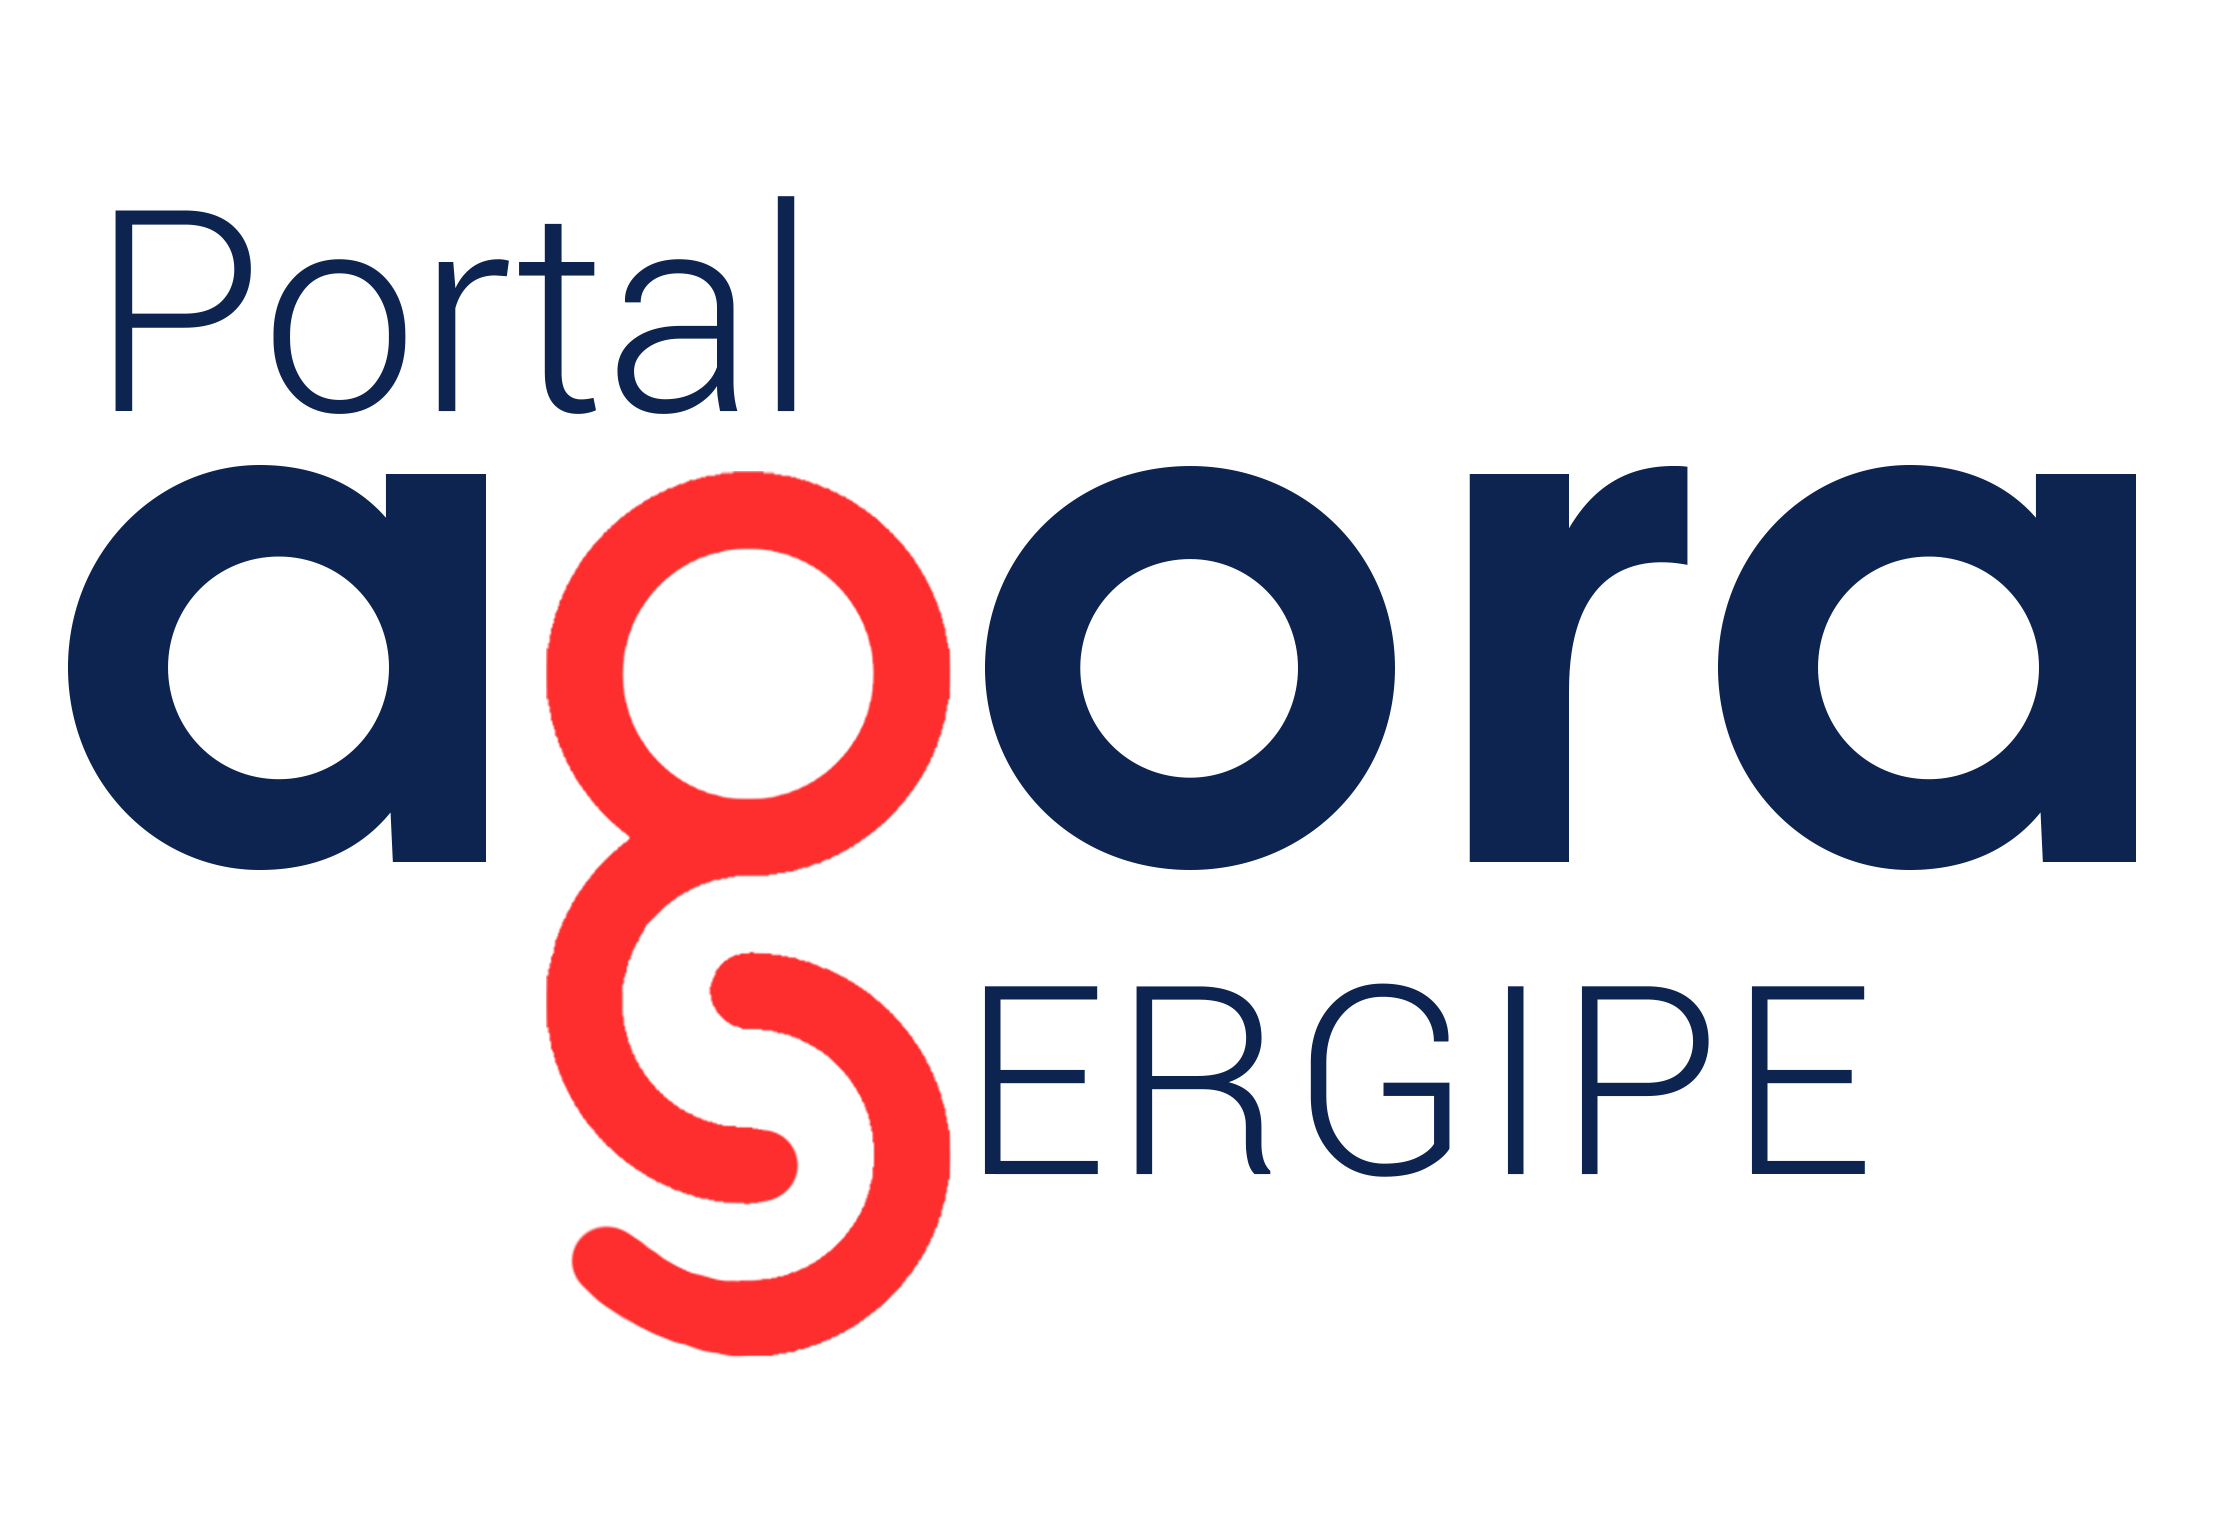 Portal Agora - Sergipe